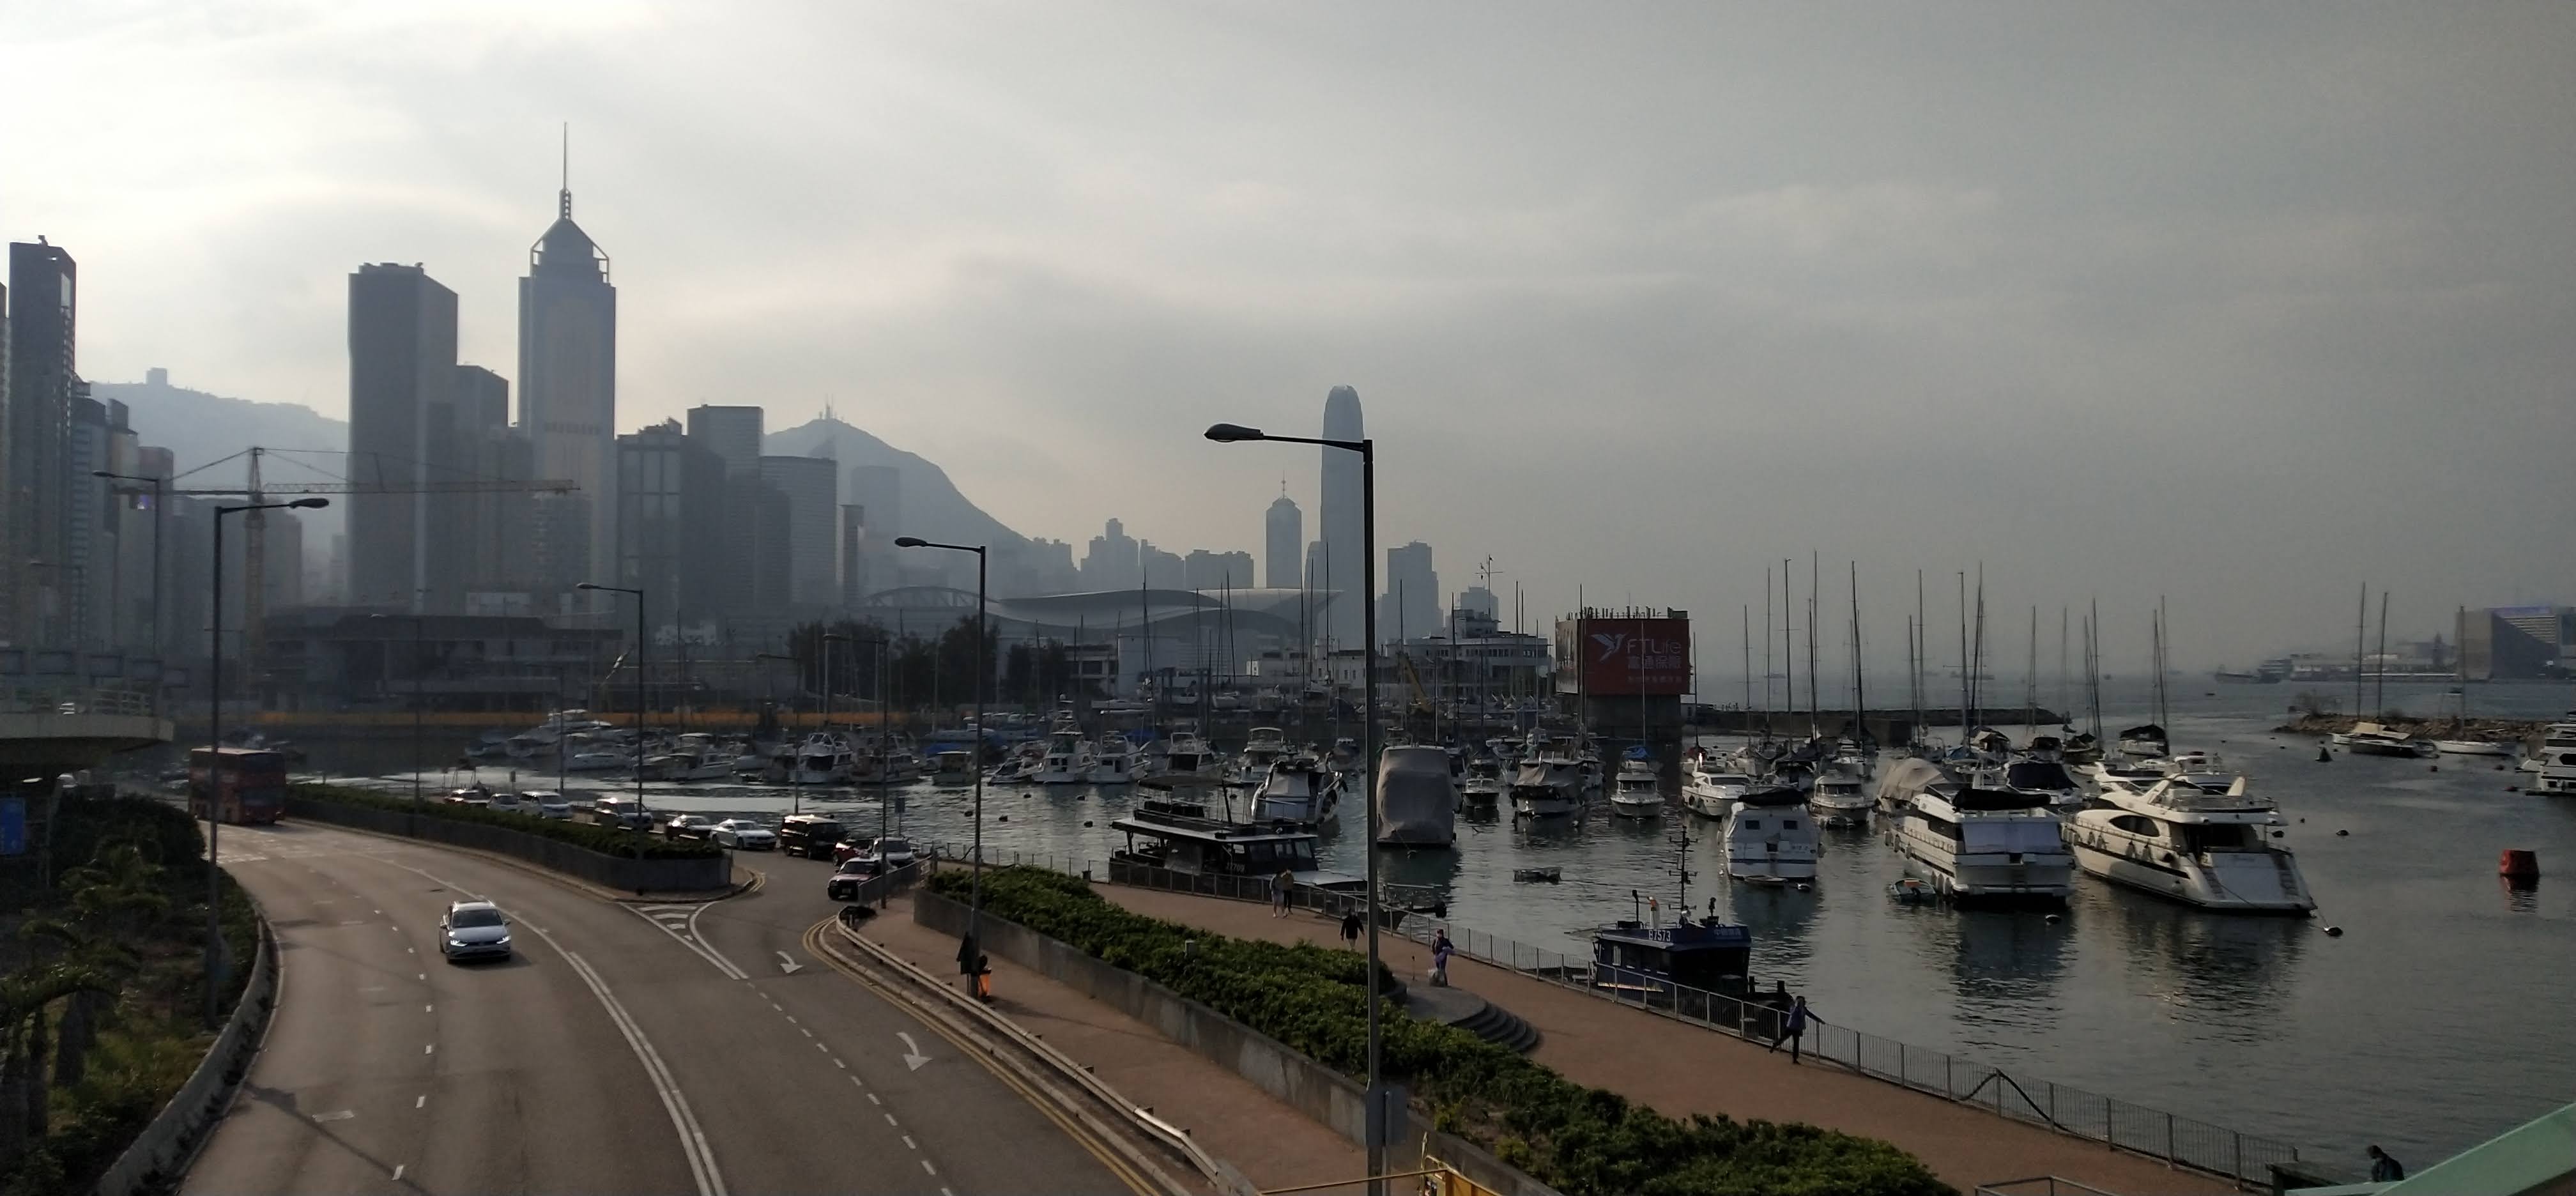 Causeway Bay Typhoon Shelter 